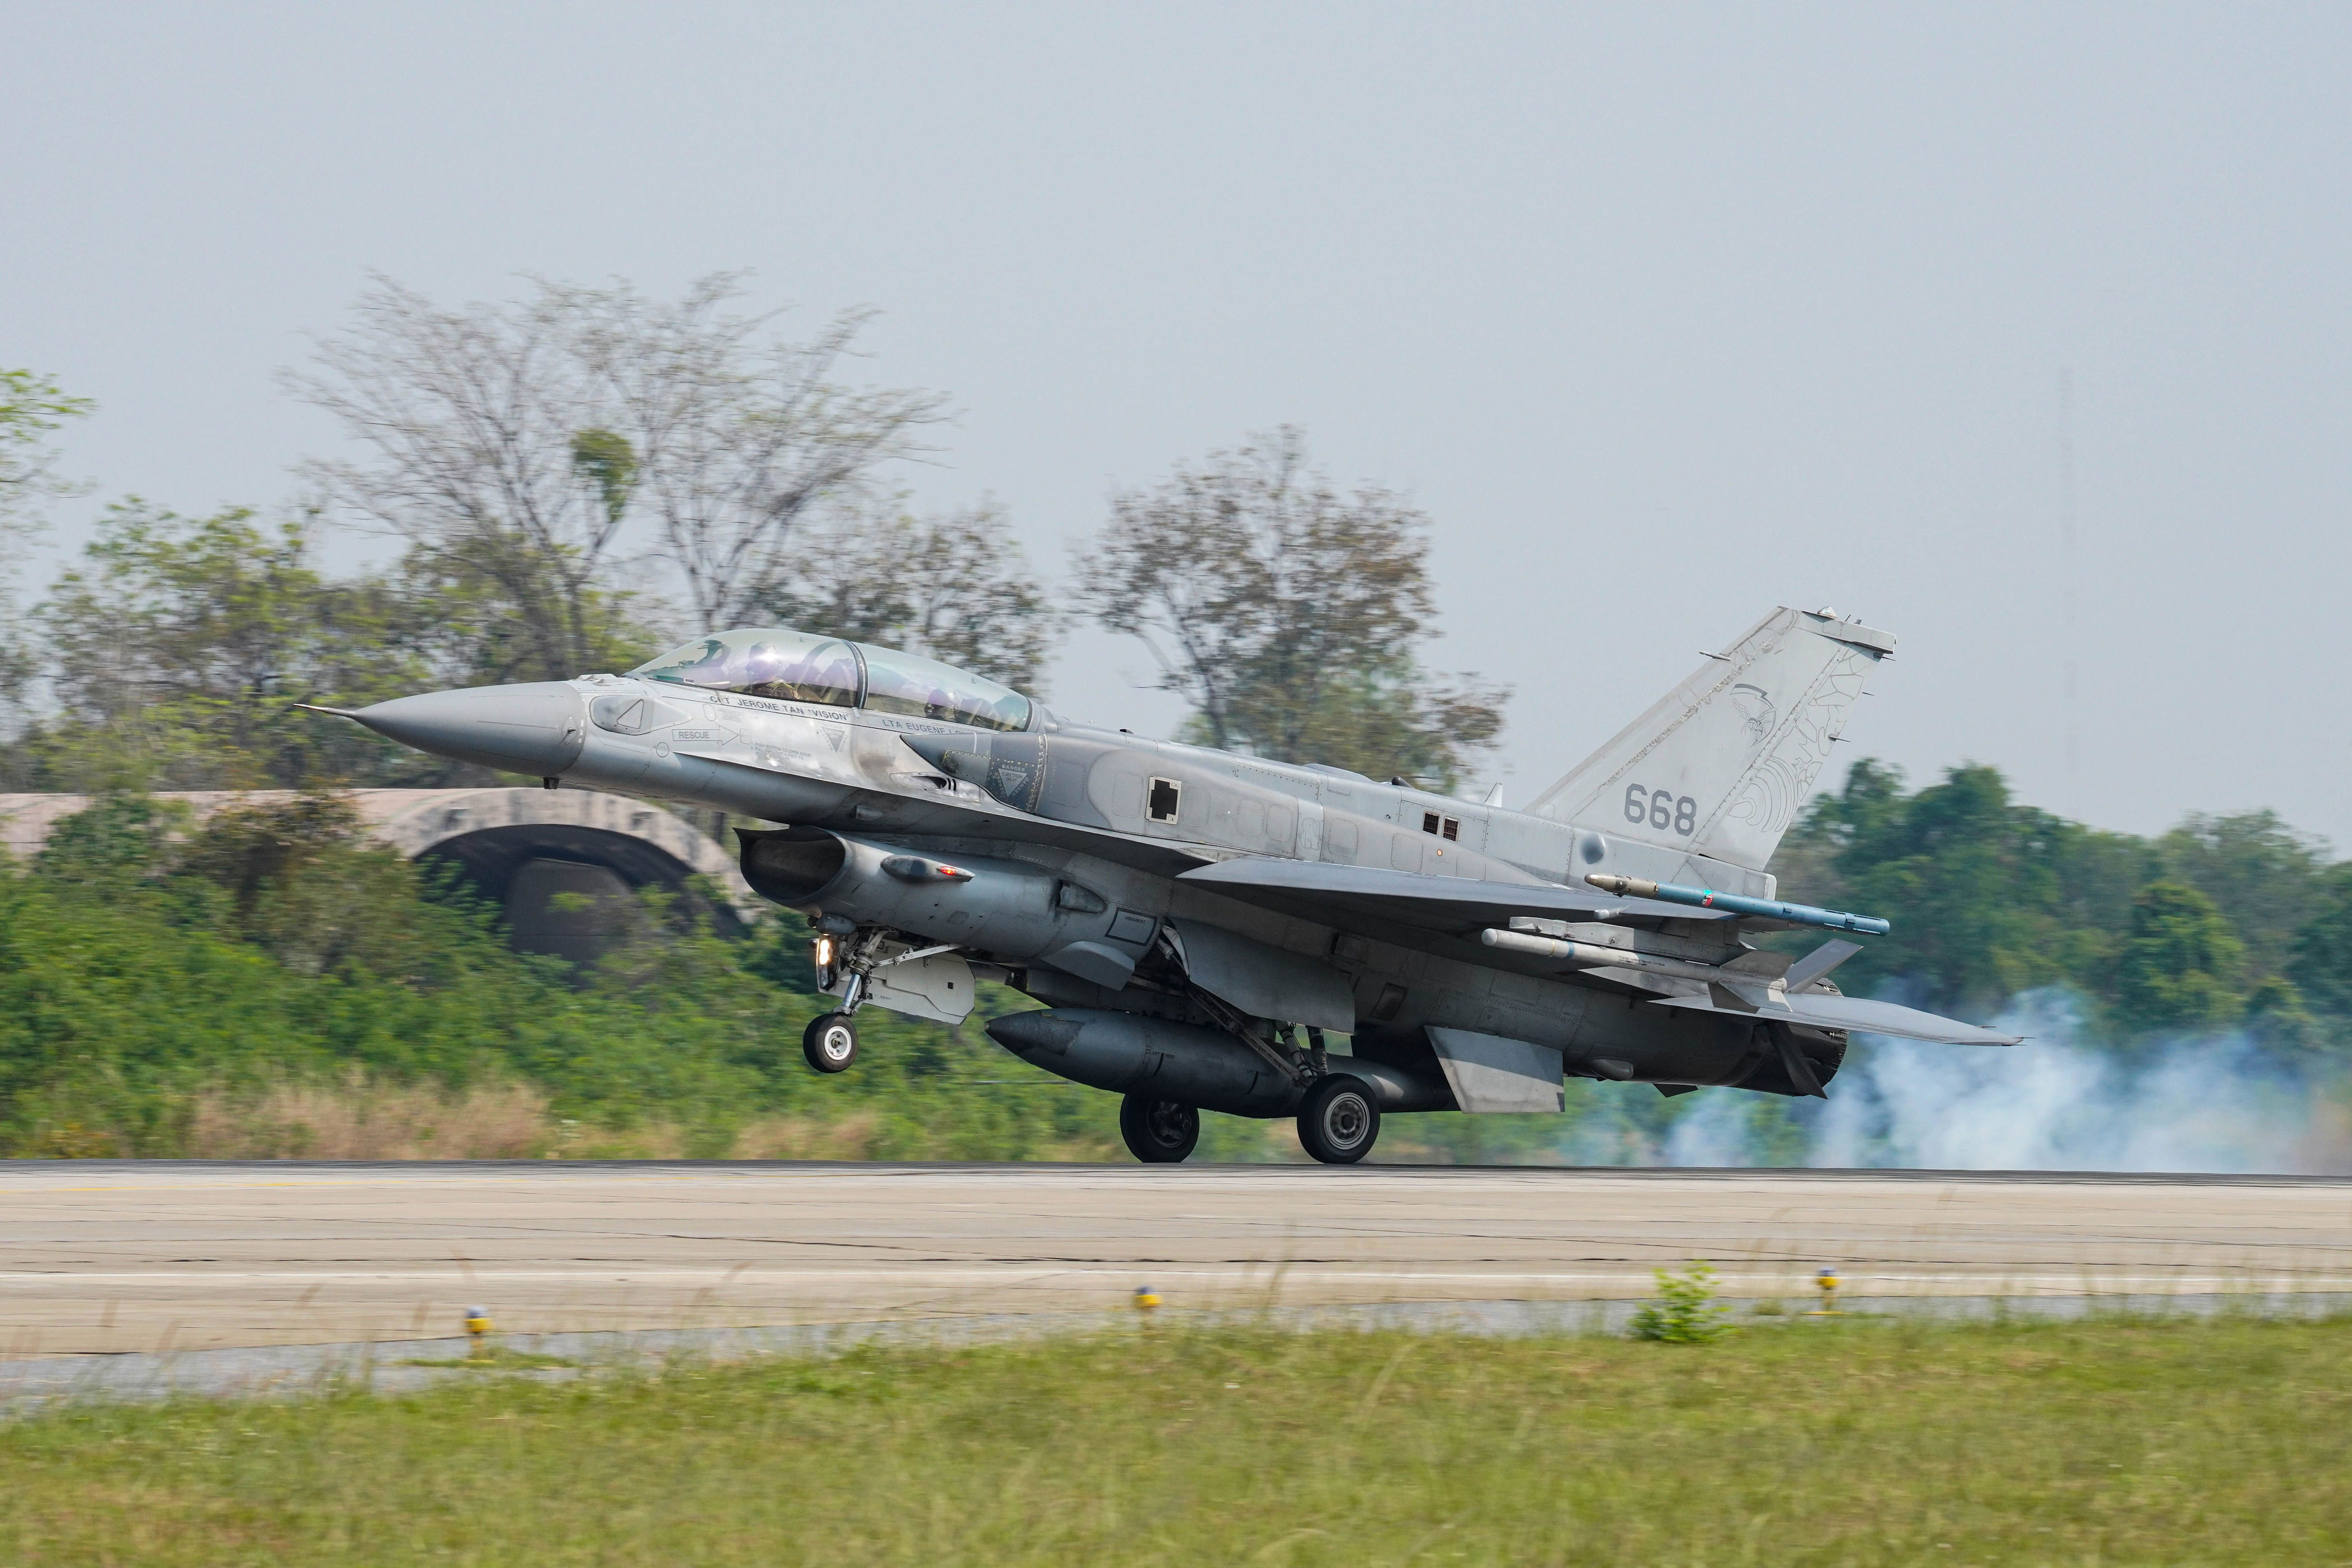 rsaf f-16 jet crashes at tengah air base